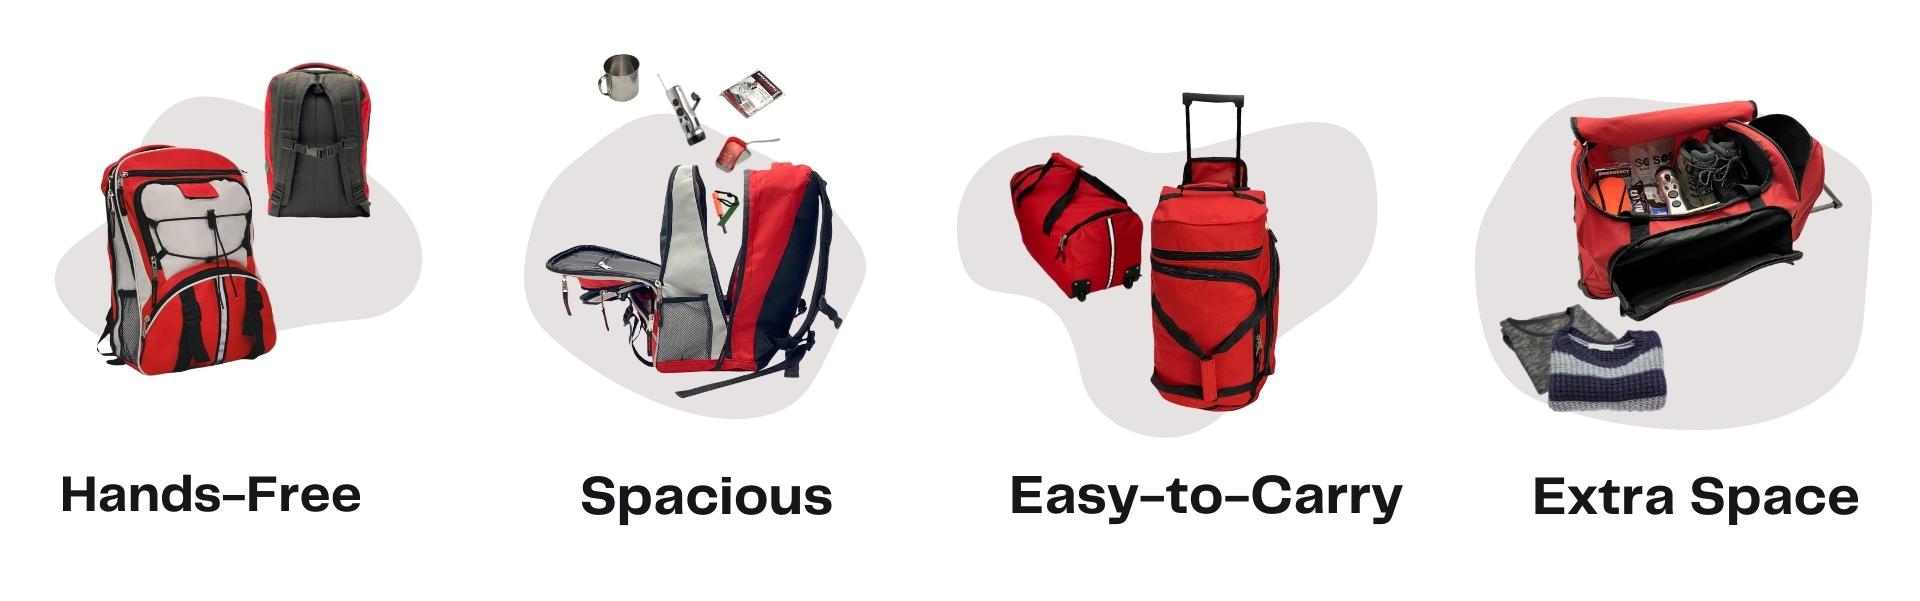 Emergency BagsKits  SURVIVAL SKILL SAVVY  Emergency bag Emergency  preparedness kit Emergency go bag